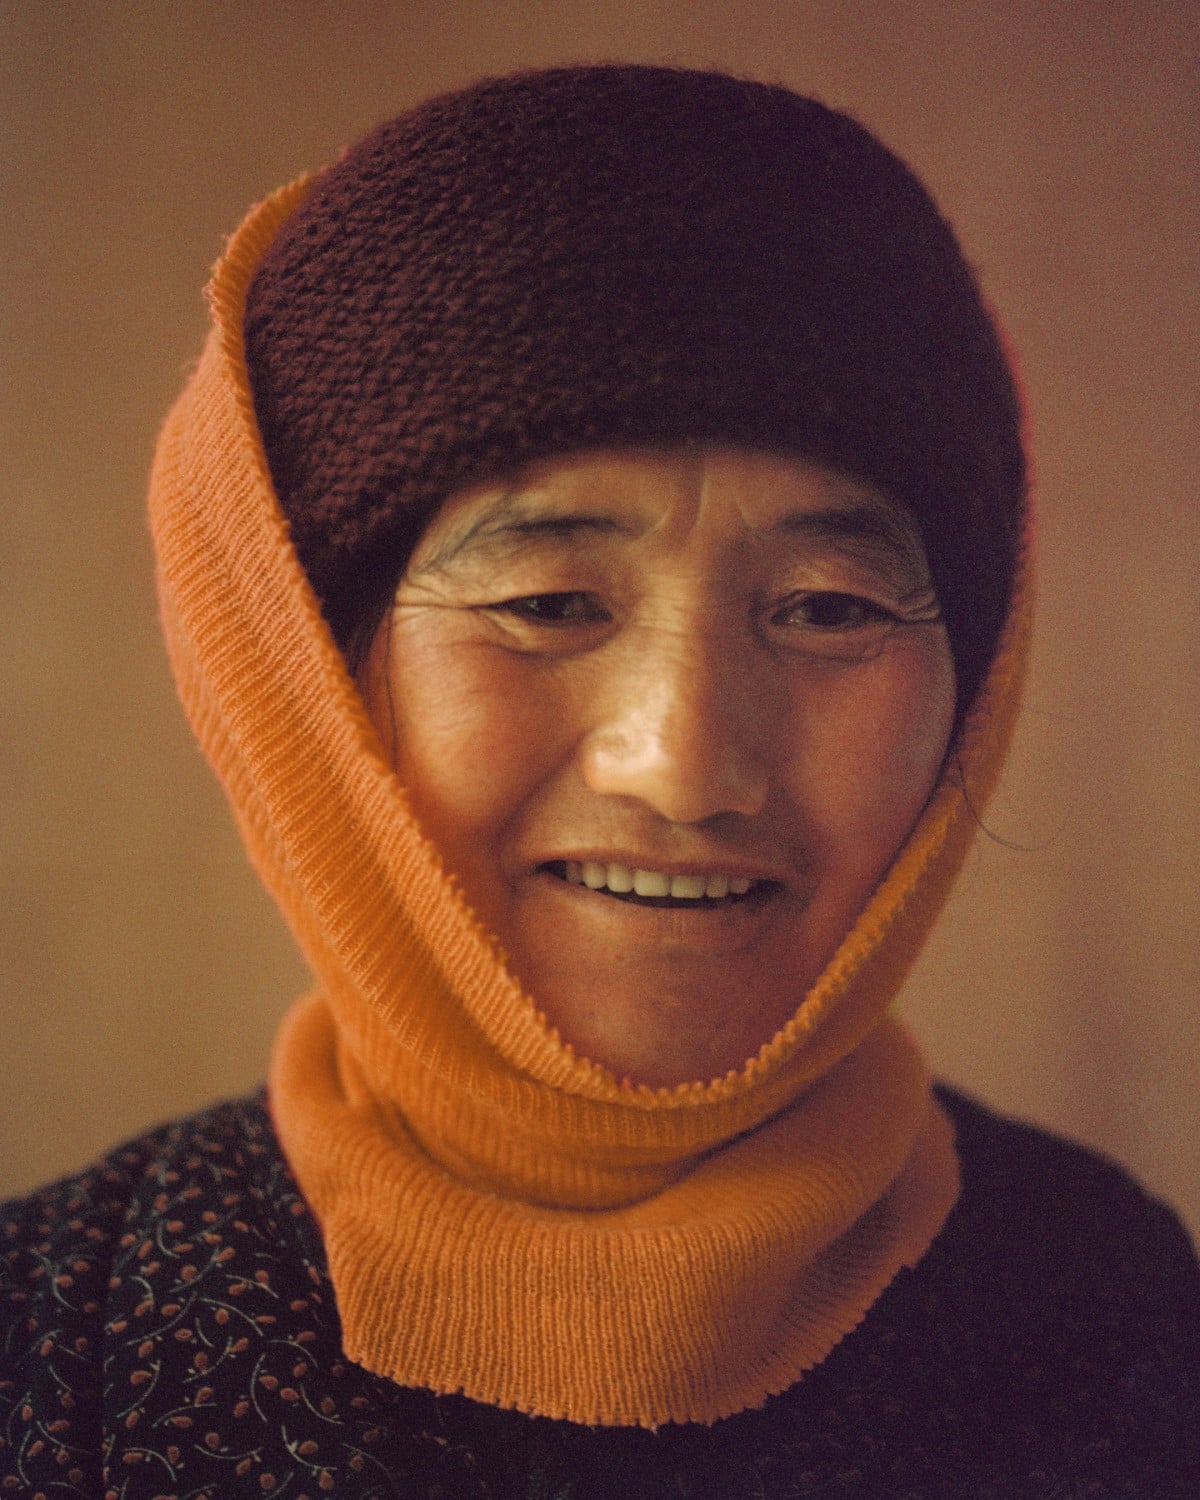 Woman in Tibet